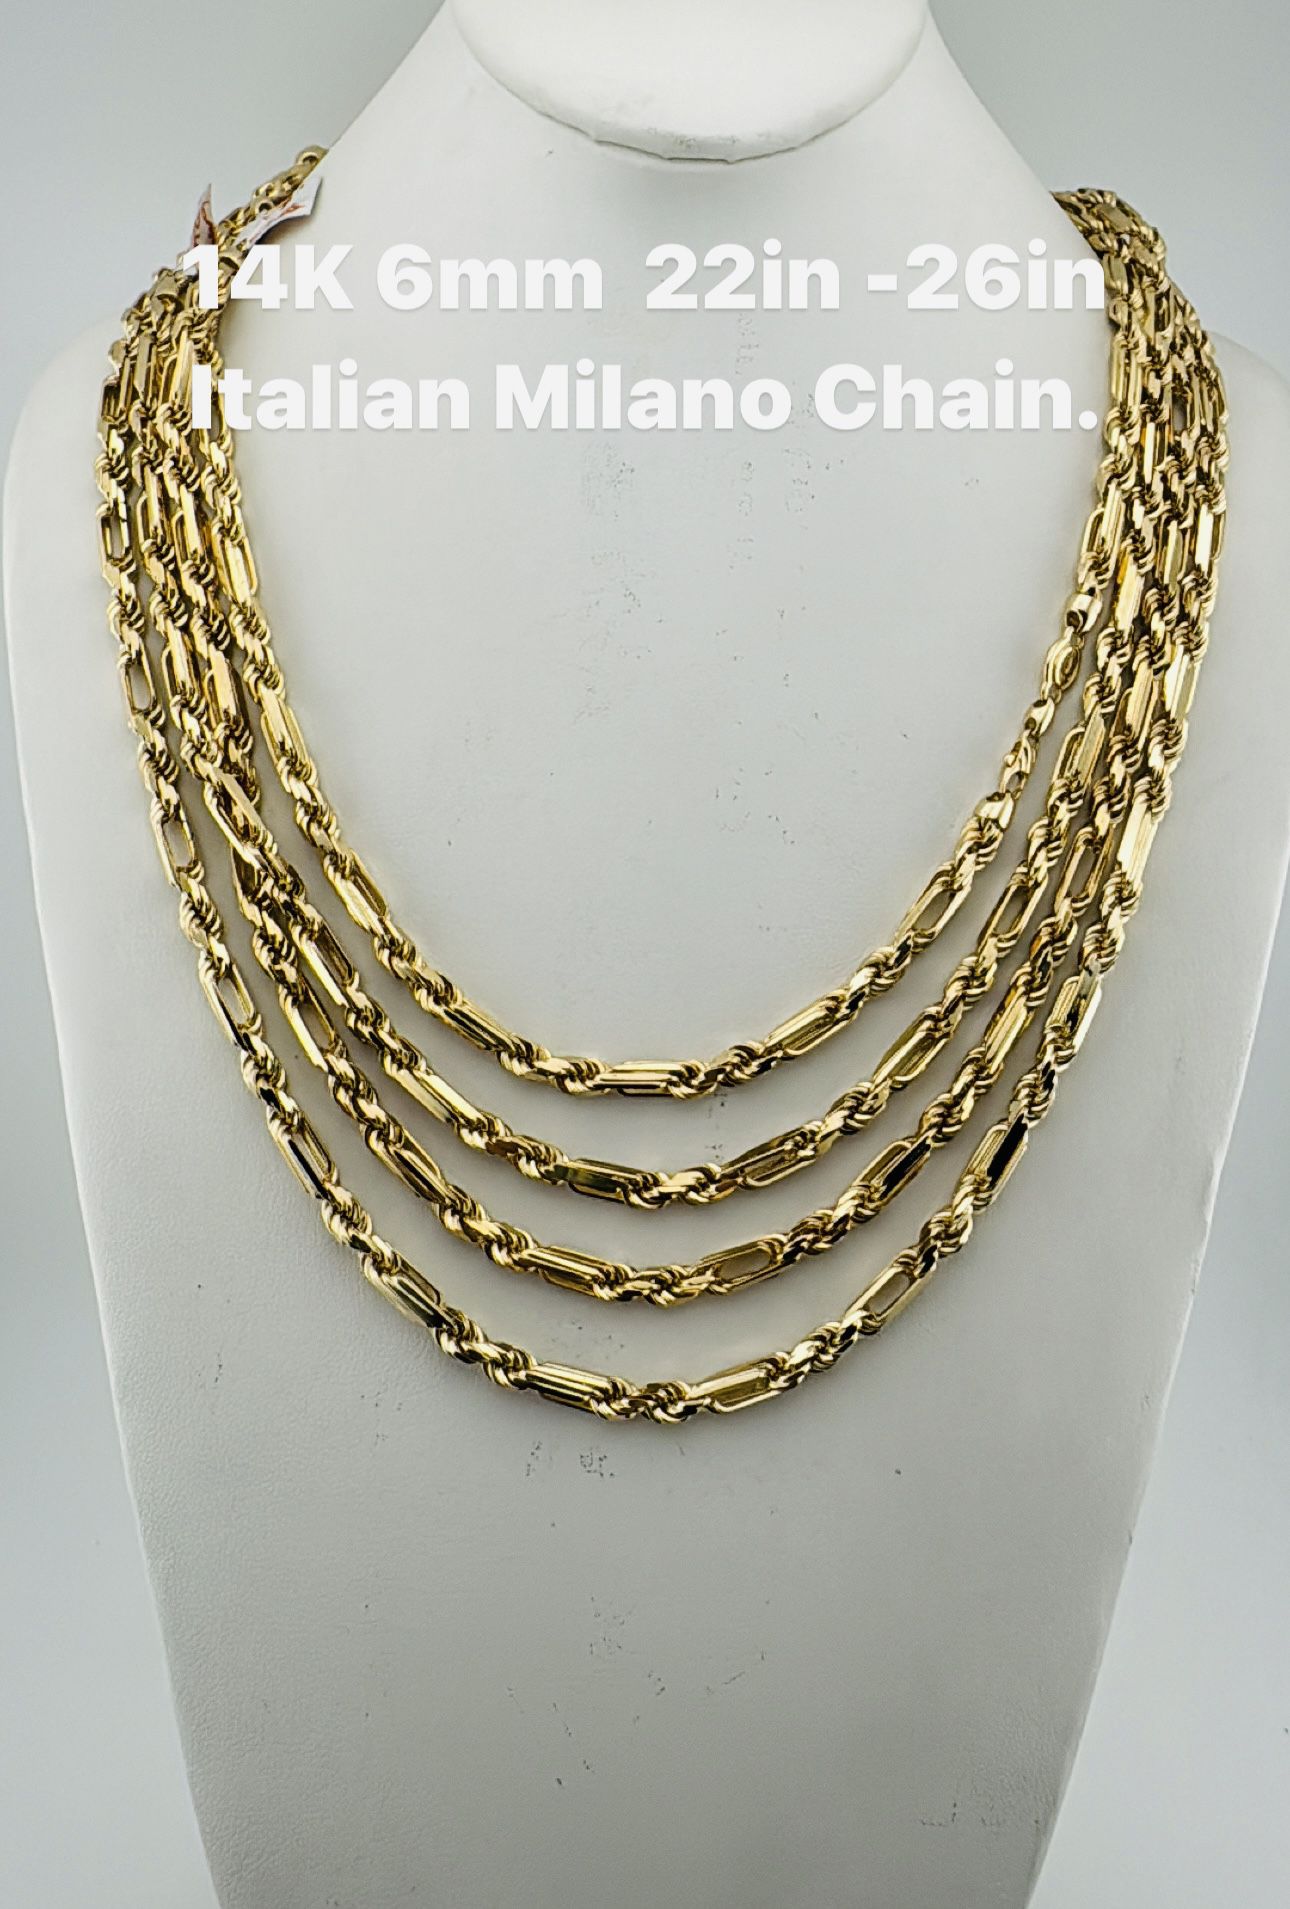 14K 💯 italian Milano Chain 6mm 22-24in . brand new.